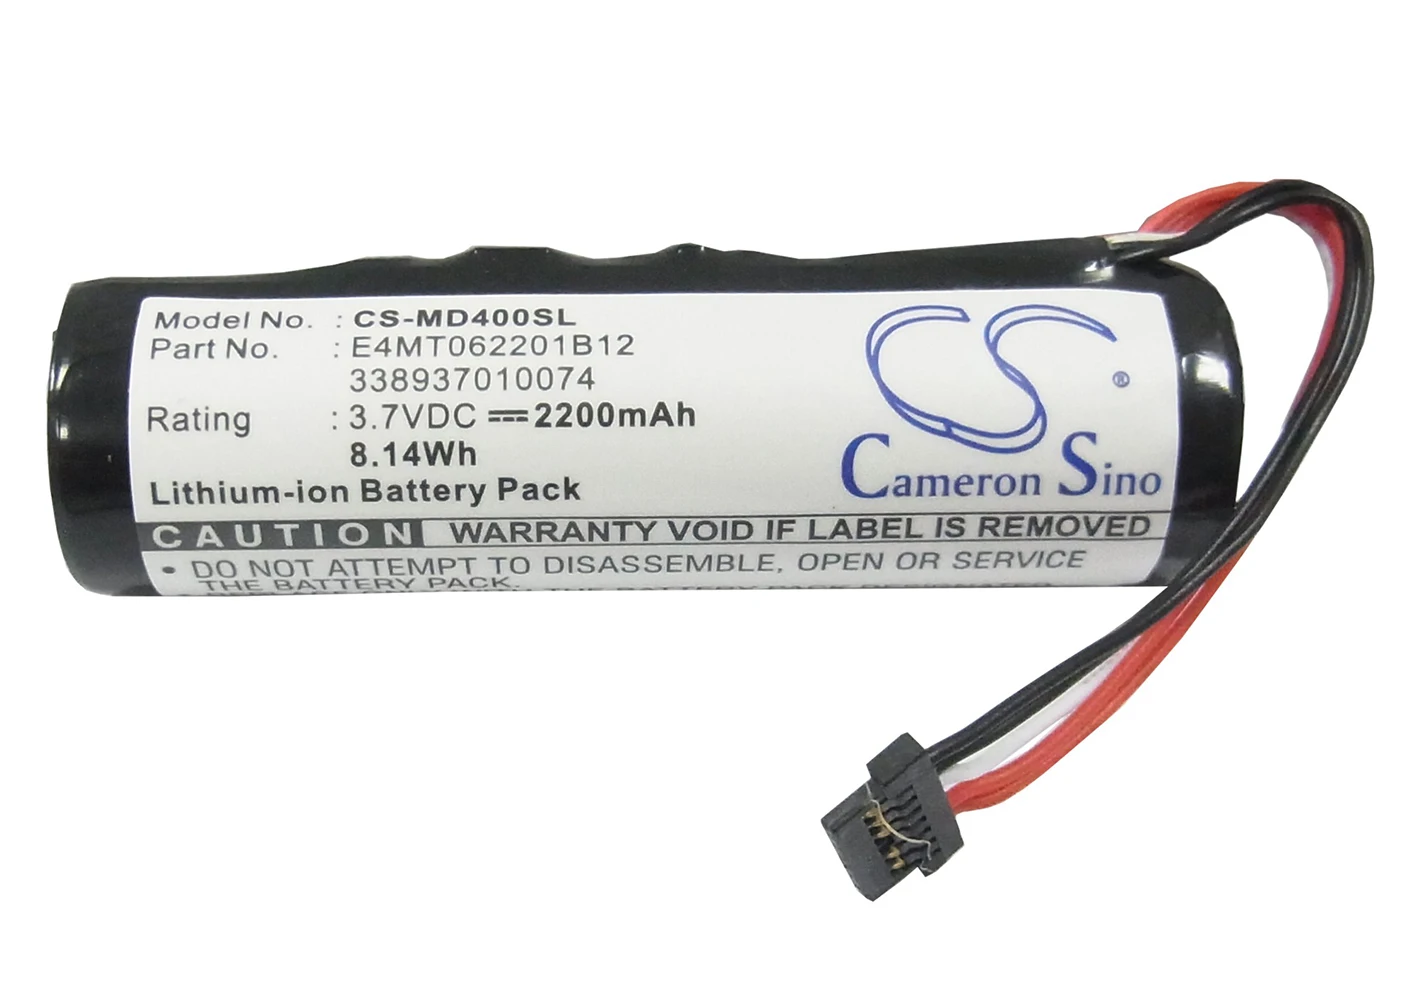 

Cameron Sino 2200mA Battery for Medion PAN405, PNA400, PNA-400, PNA-405 338937010074, C03101TH, E4MT062201B12